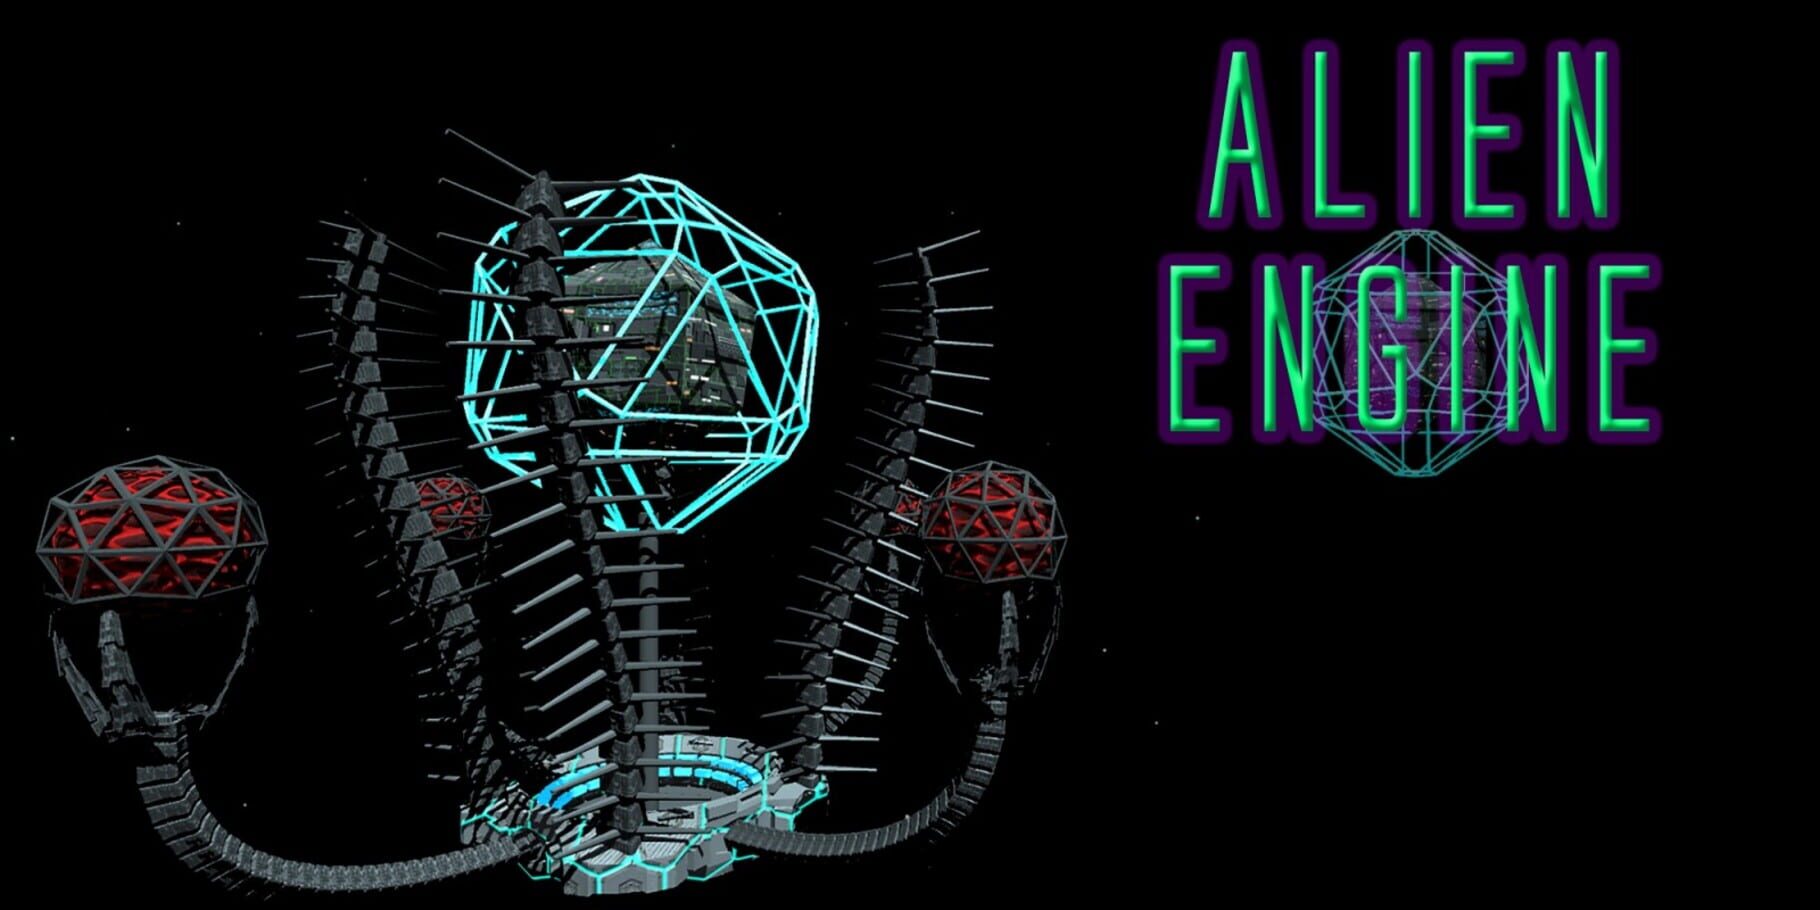 Alien Engine artwork